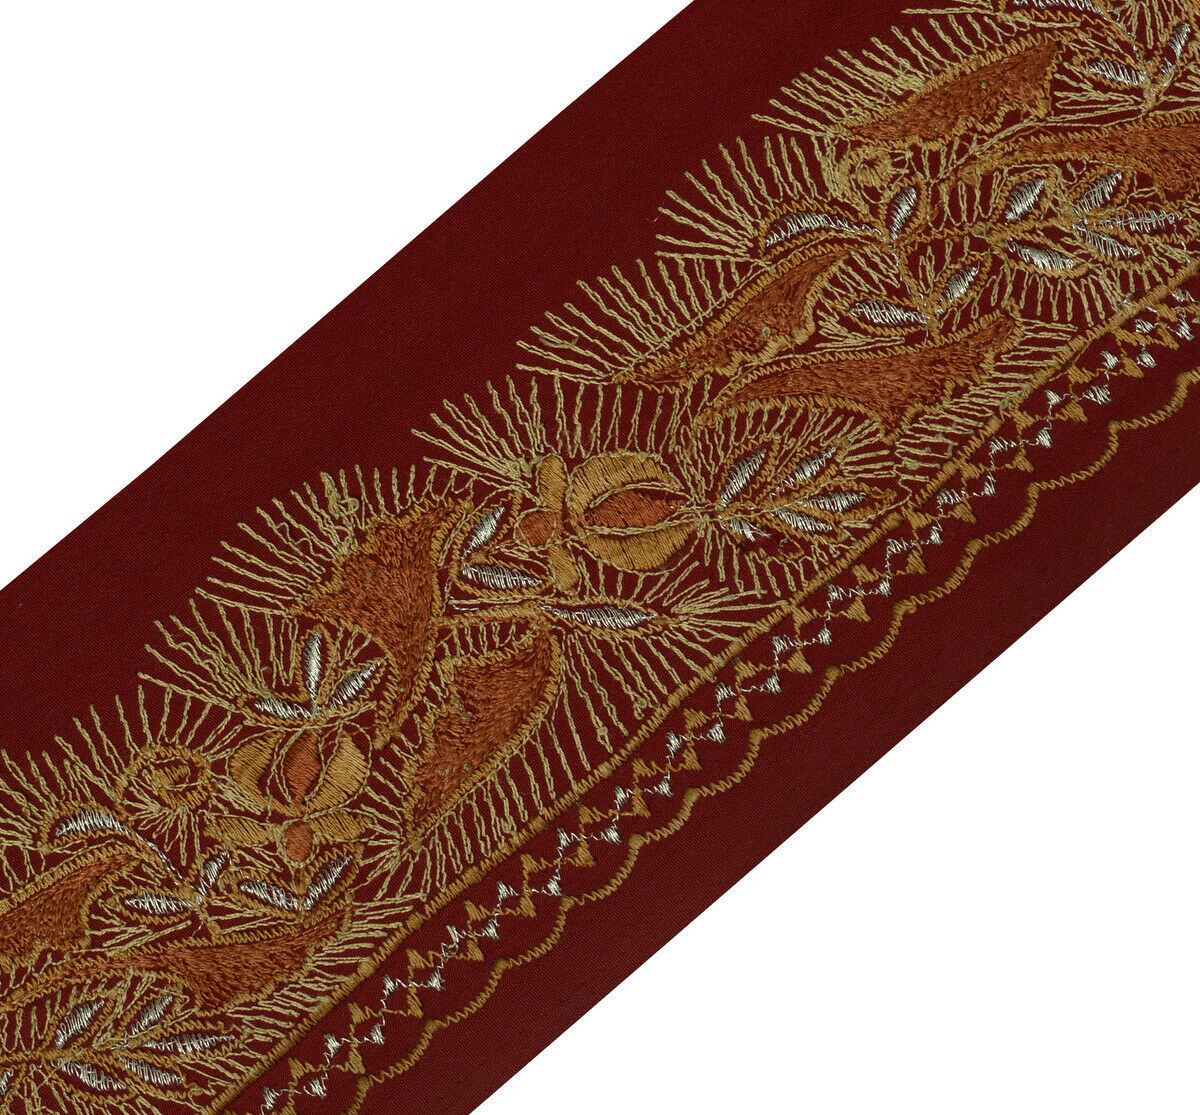 Antique Vintage Saree Border Indian Craft Trim Embroidered Floral Ribbon Maroon